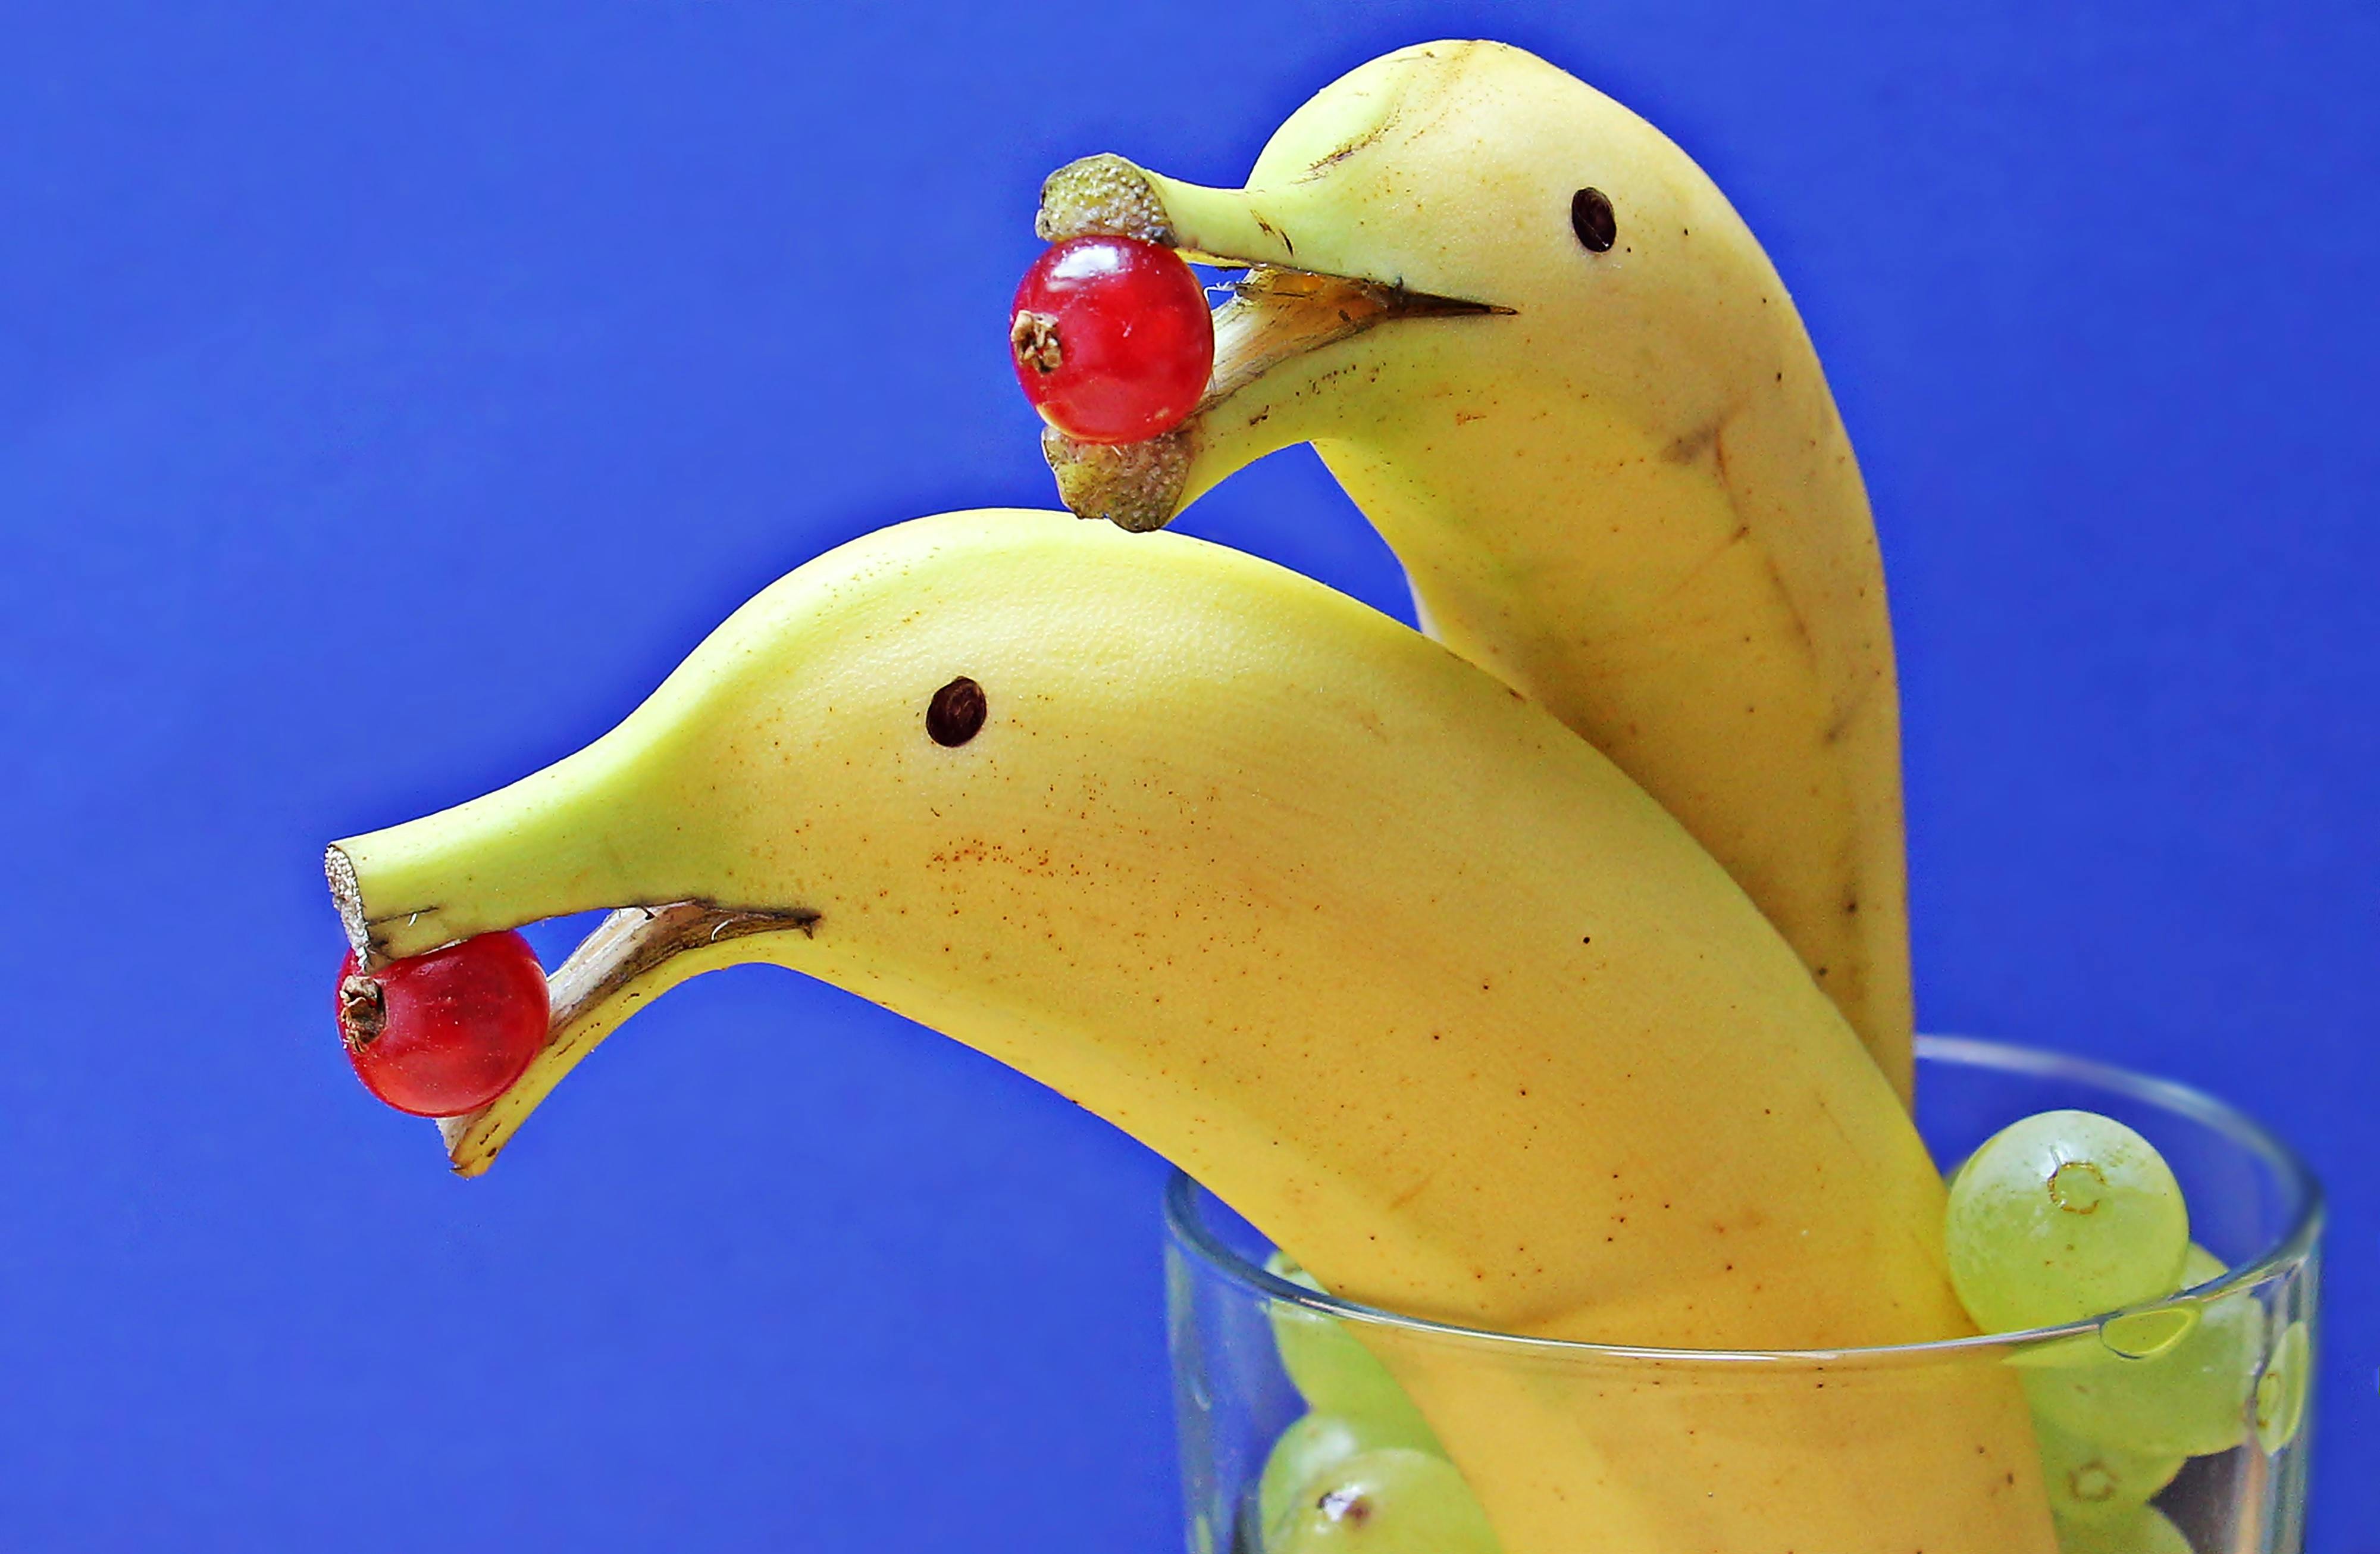 Kostenloses Foto zum Thema: appetitlich, banane delphin, banane snack